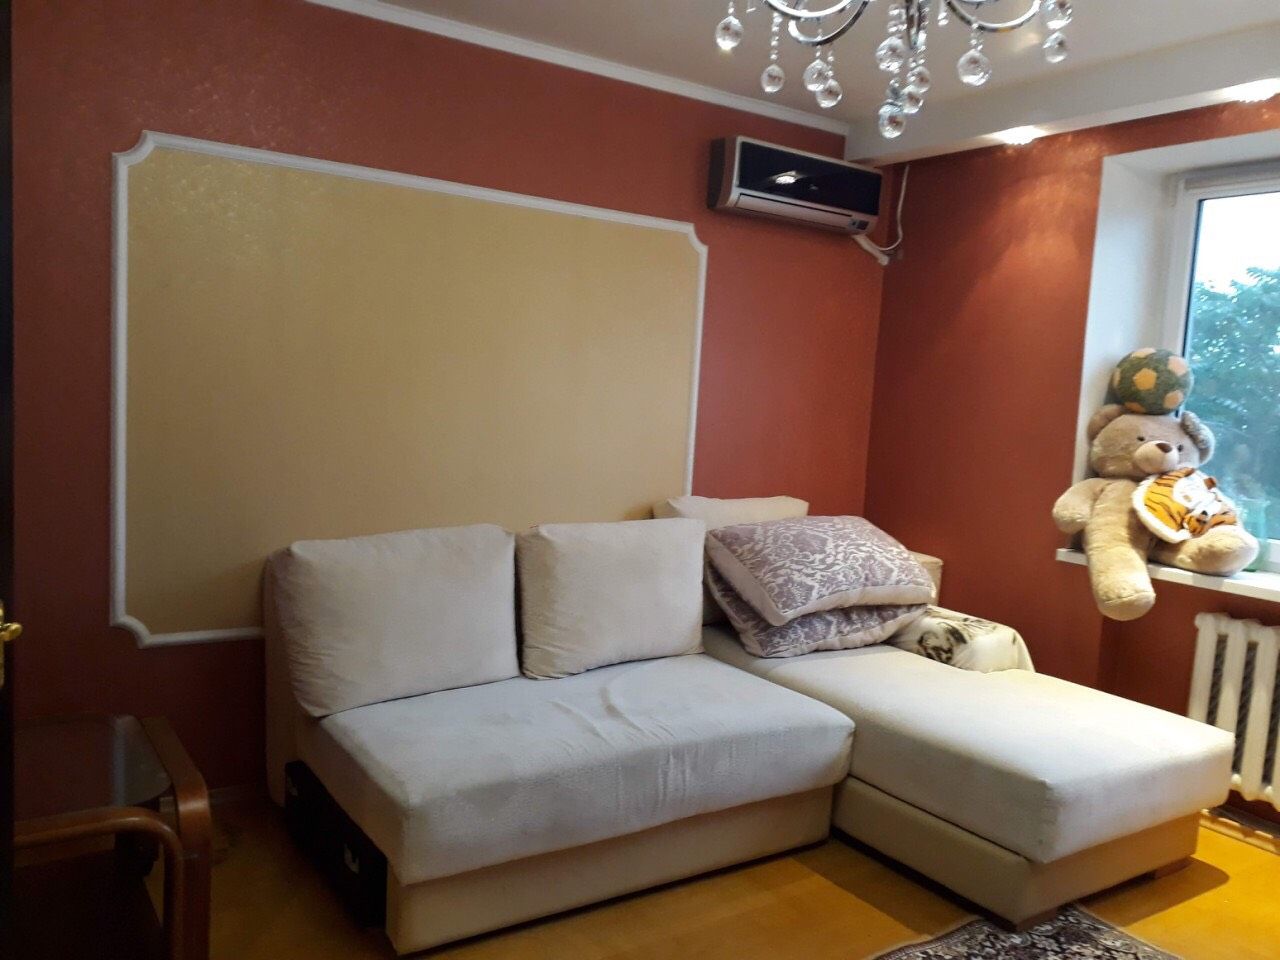 Аренда 2-х комнатной квартиры на Прохоровской.